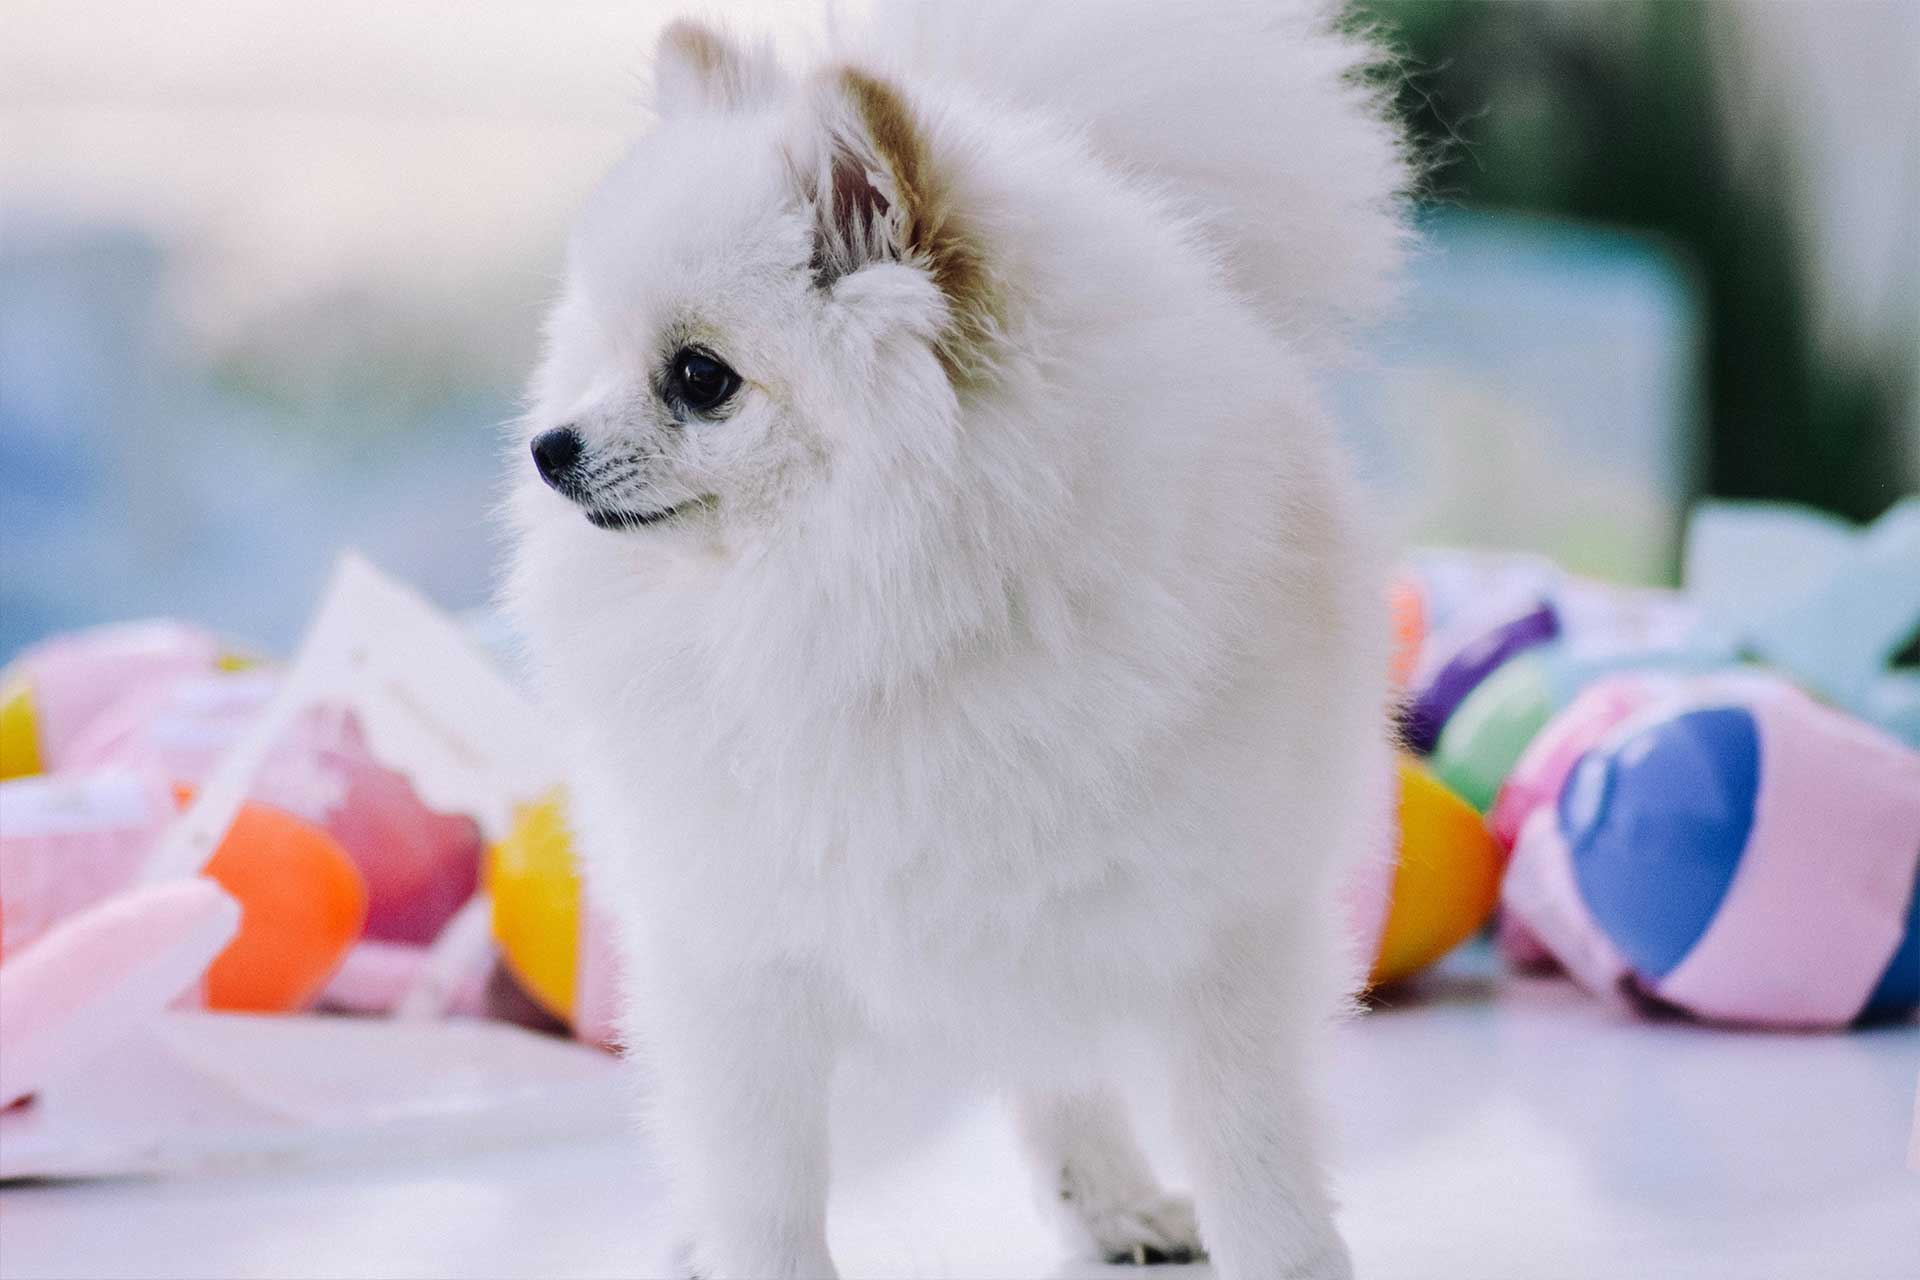 full grown toy Pomeranian dog with white coat